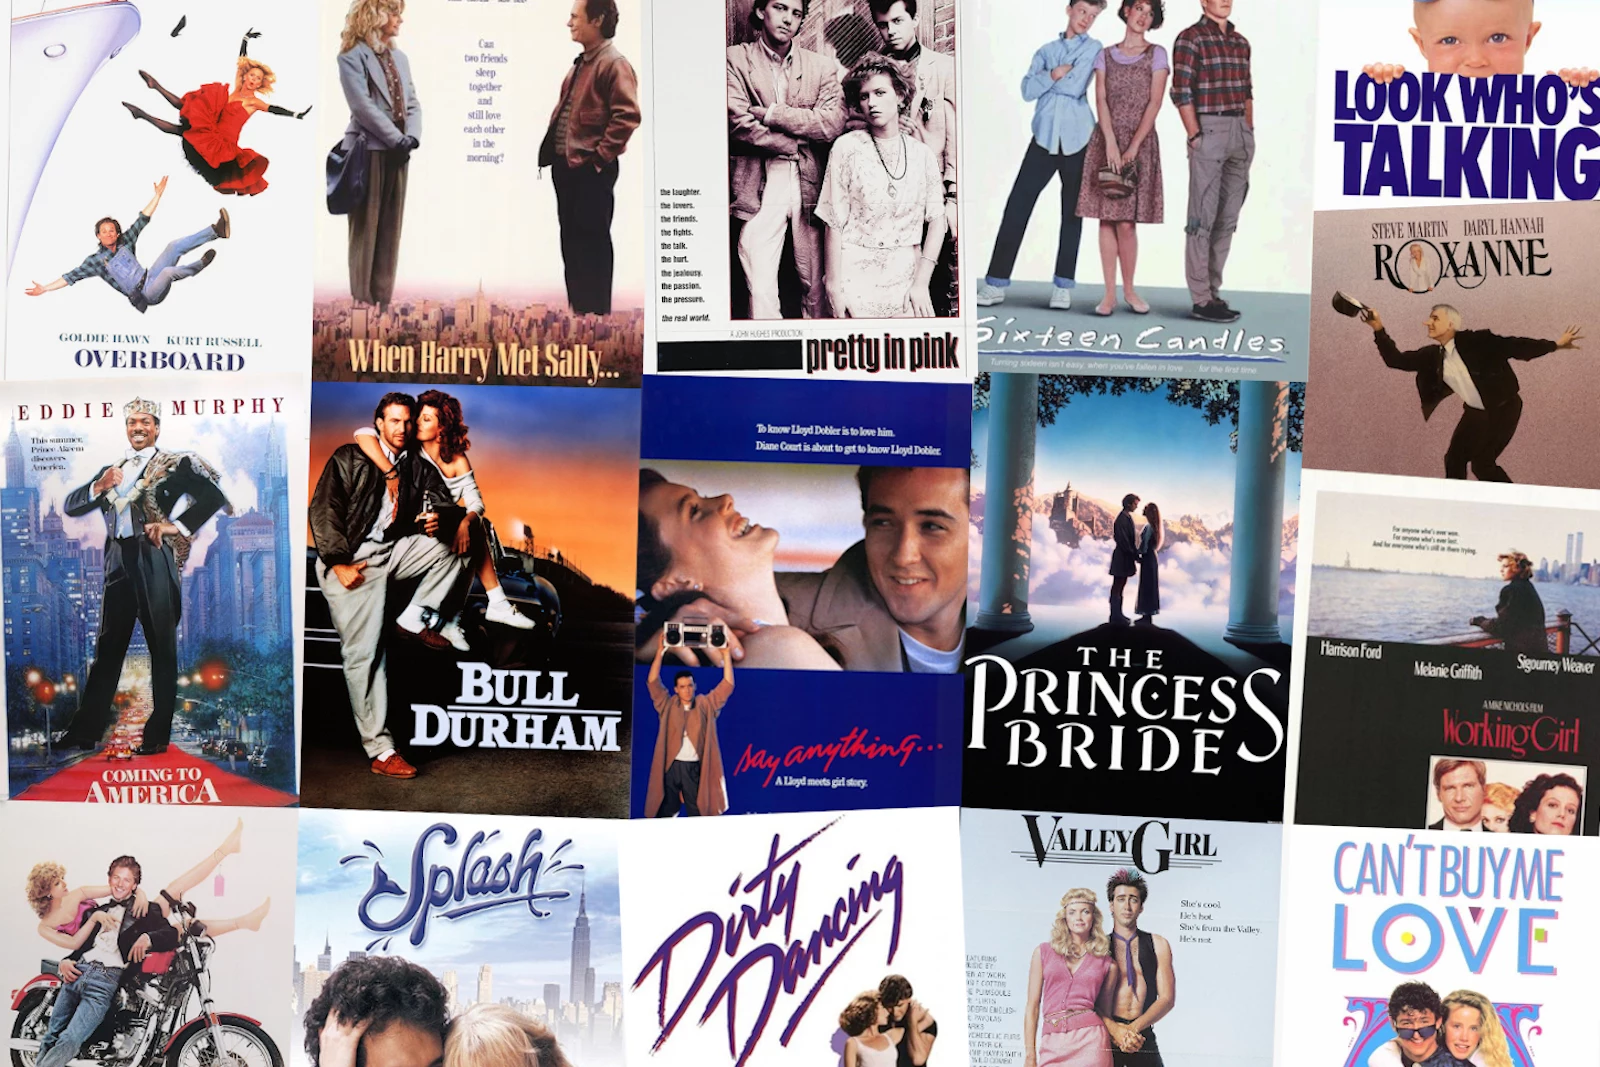 Top 20 '80s Romantic Comedy Movies